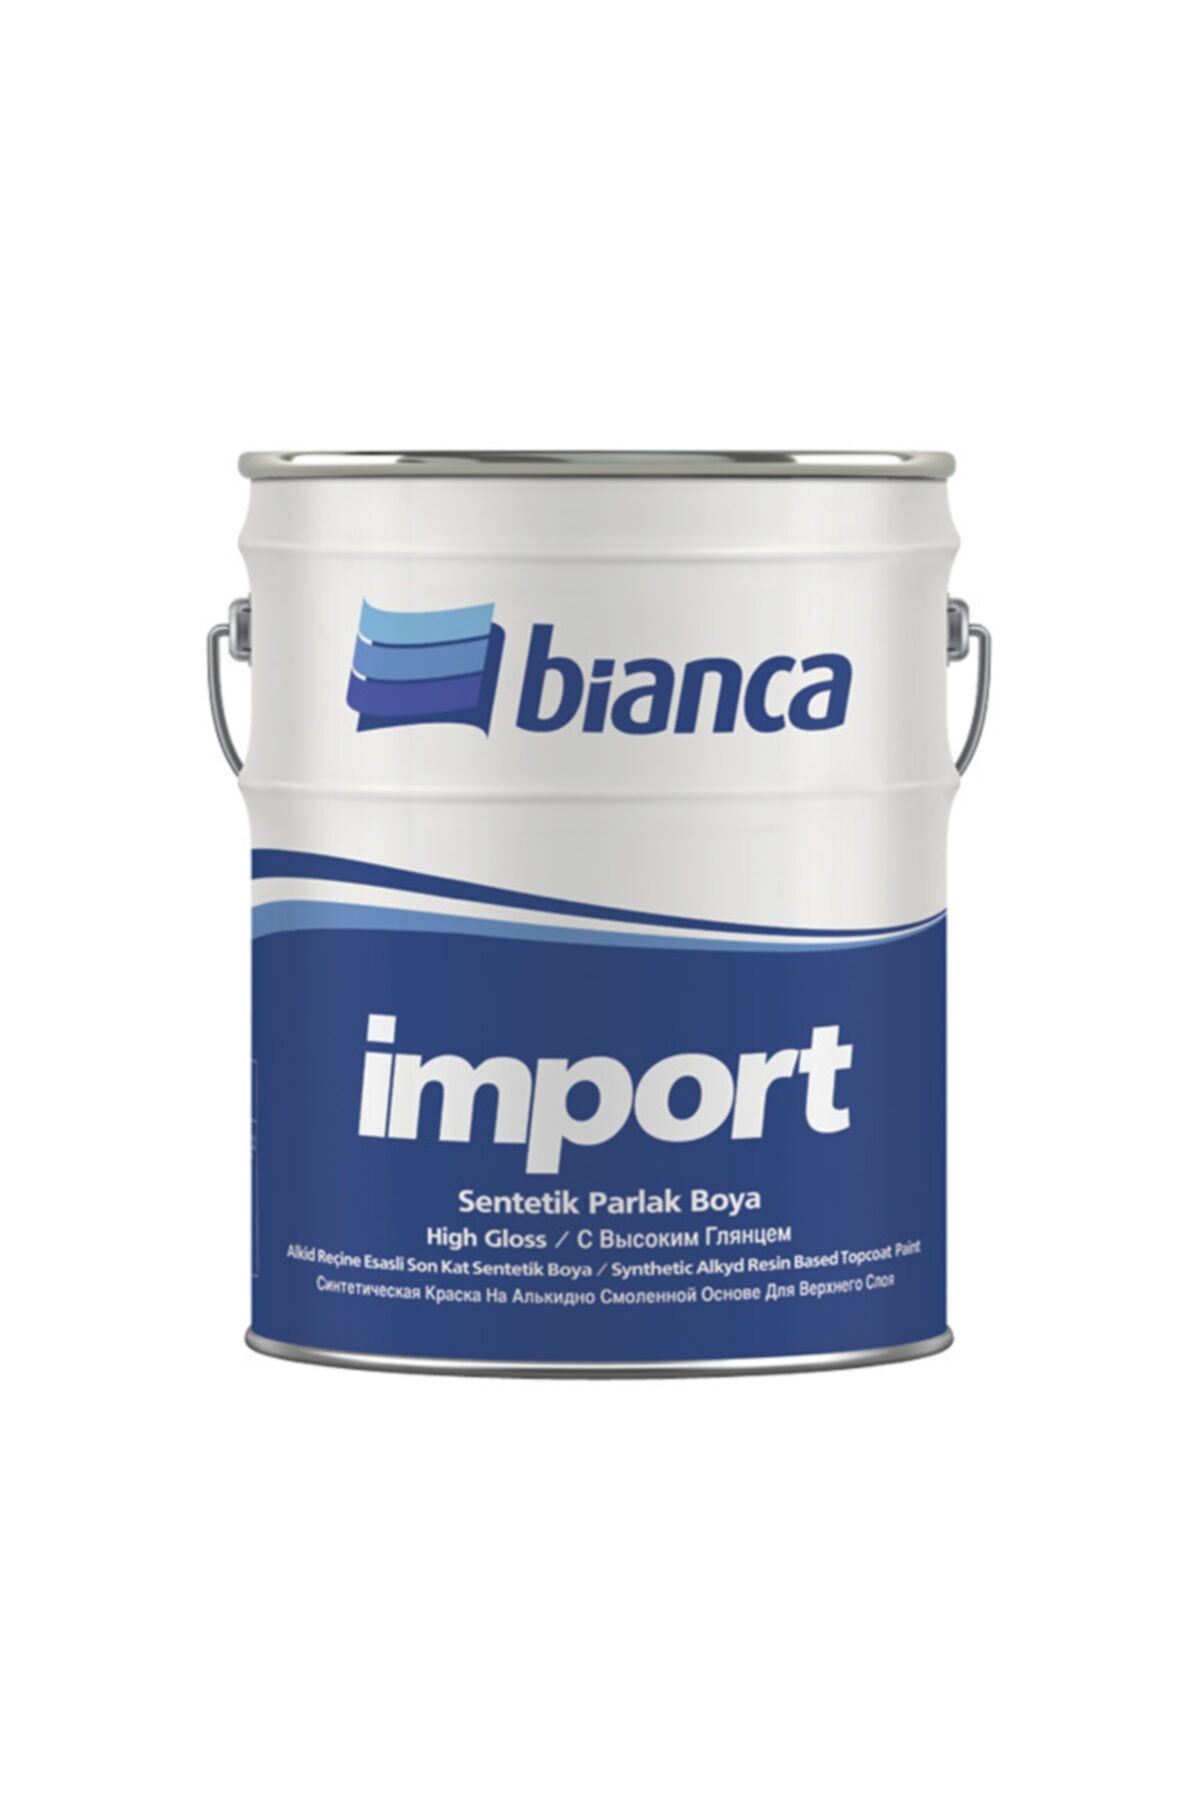 Bianca Import Sentetik 2,5lt Tüm Renkler